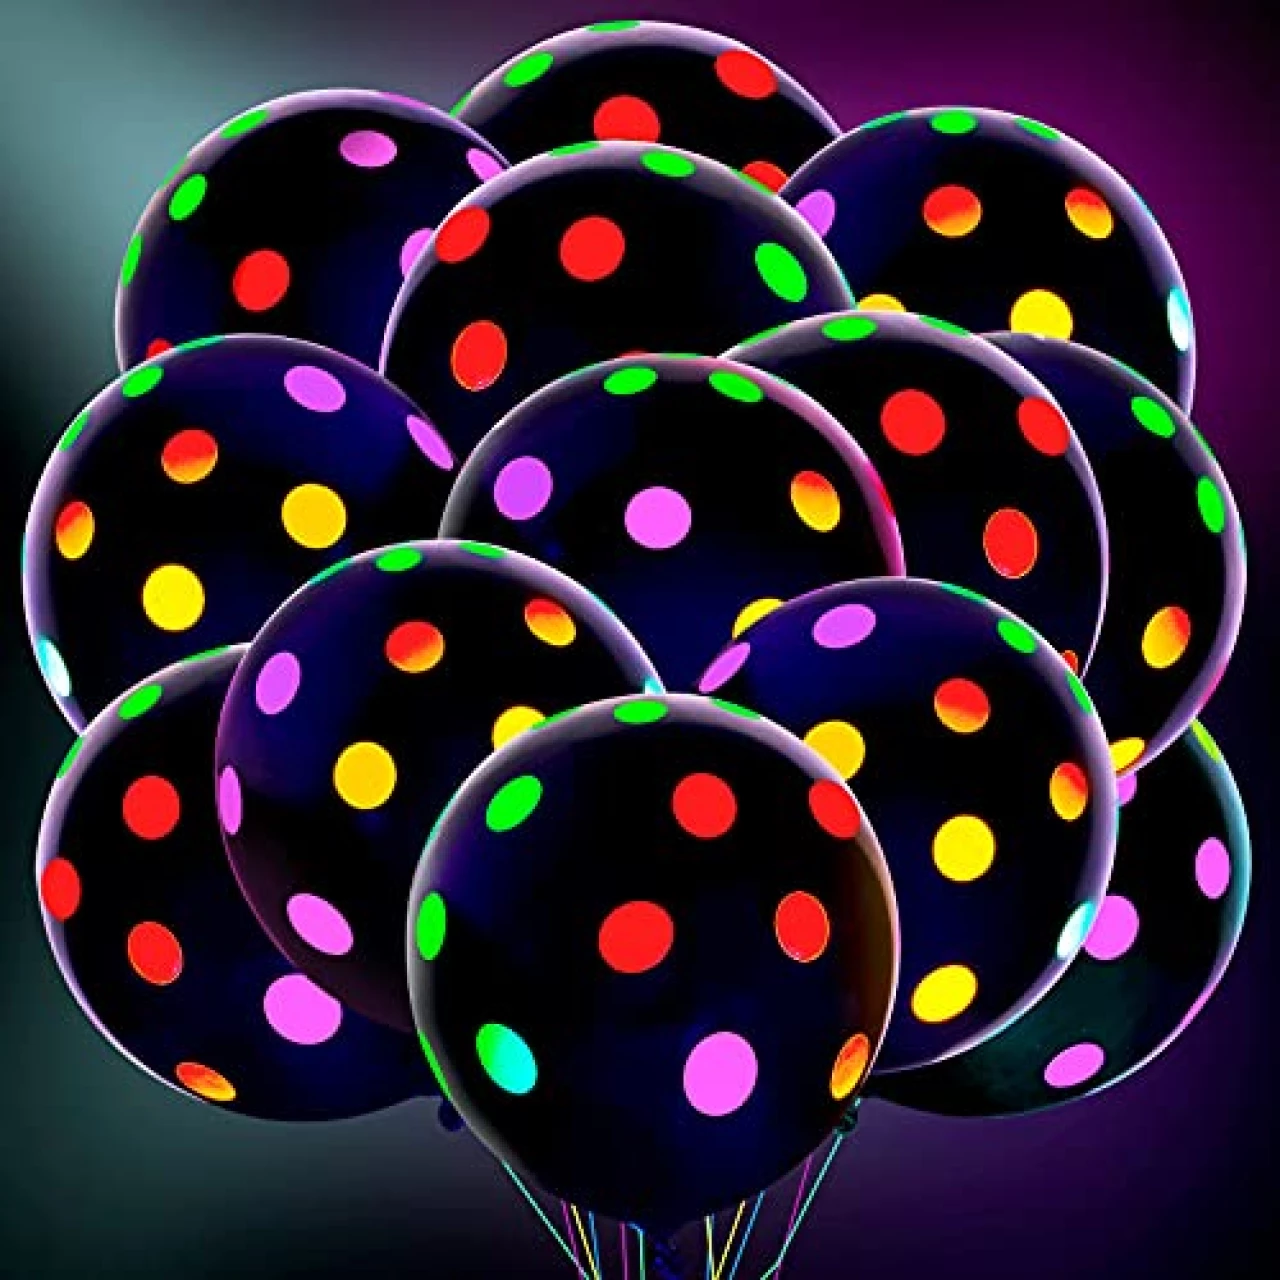 50 Pcs 12 Inch Neon Glow Balloons Glow in The Dark Balloons UV Polka Dot Blacklight Balloons Fluorescent Latex Balloons for Birthday Wedding Neon Party Decorations Supplies